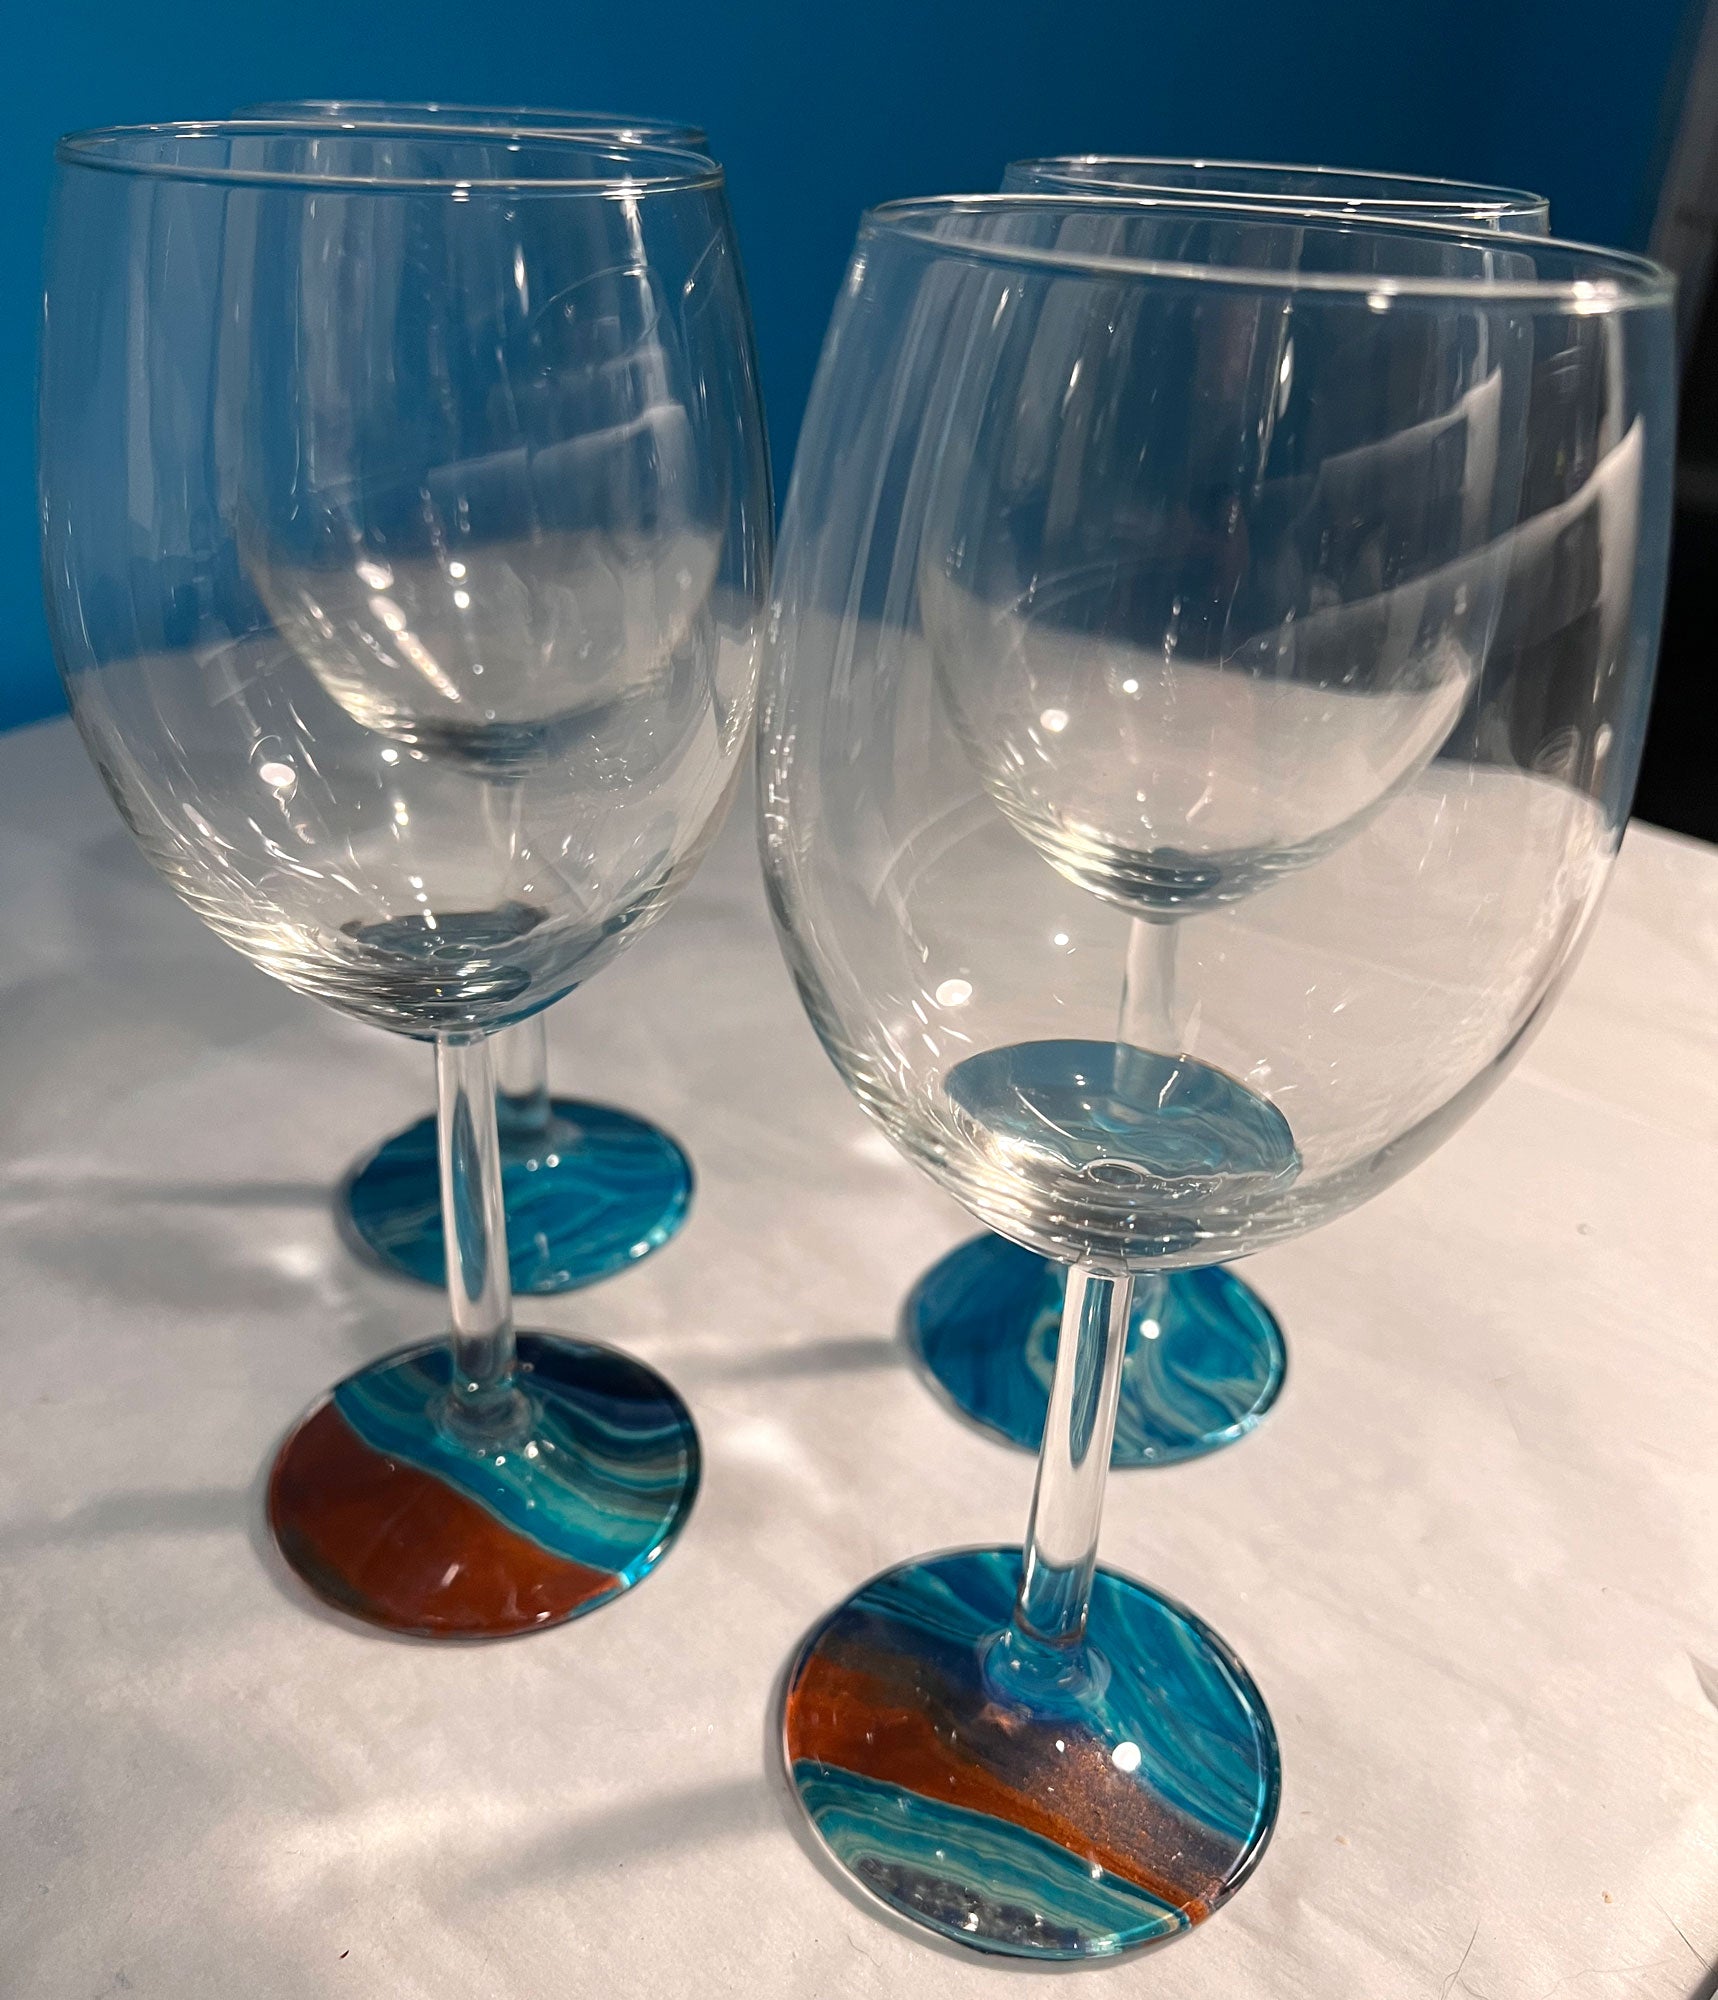 Peacock Wine Glasses « Custom Art By Alexis